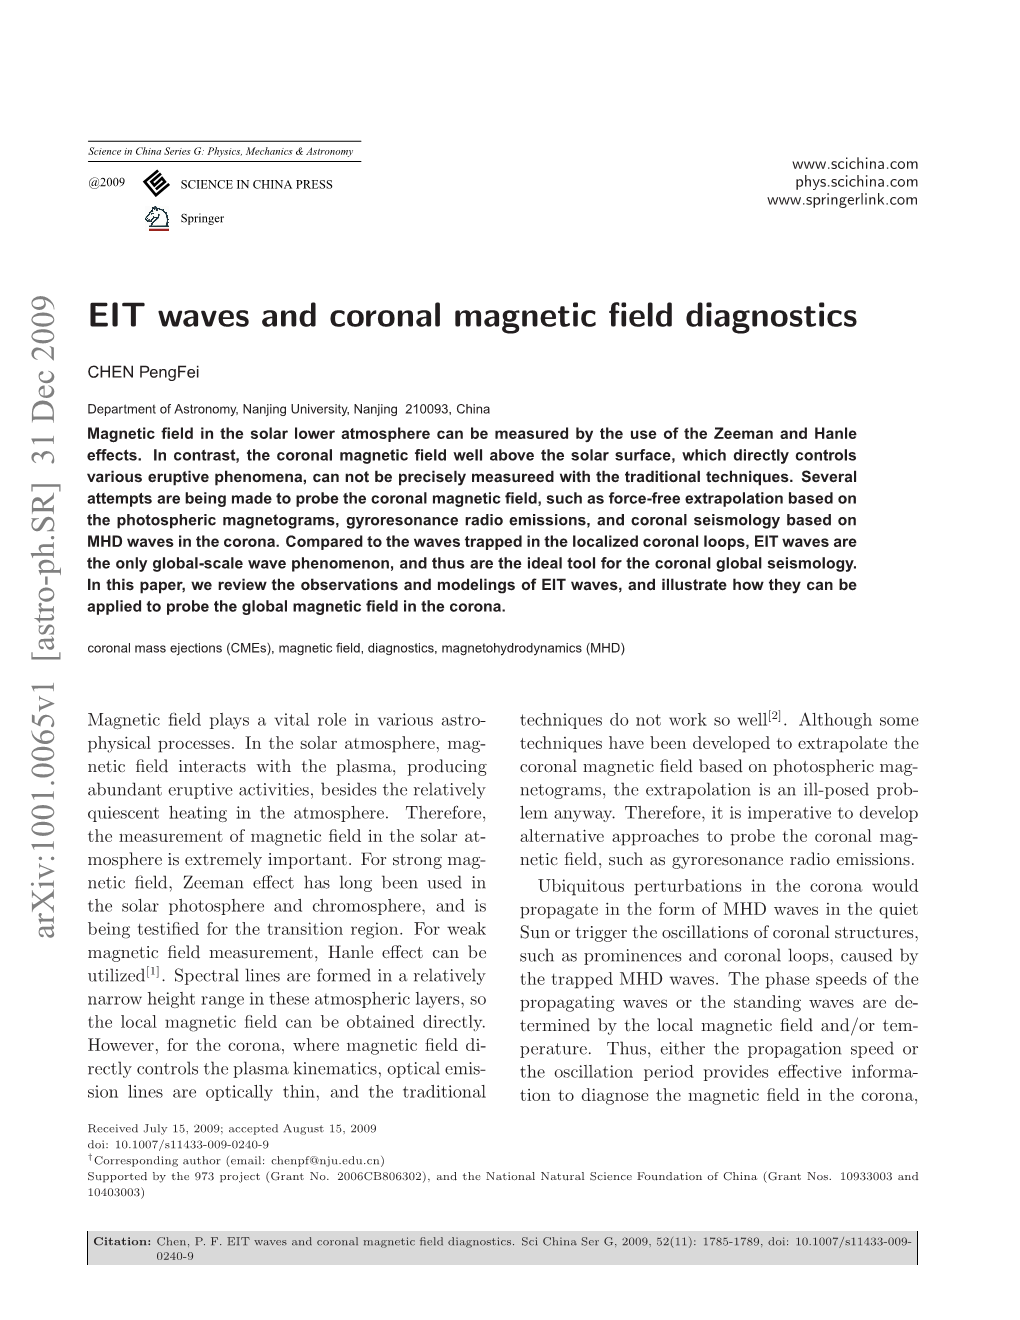 Arxiv:1001.0065V1 [Astro-Ph.SR] 31 Dec 2009 EIT Waves and Coronal Magnetic Field Diagnostics